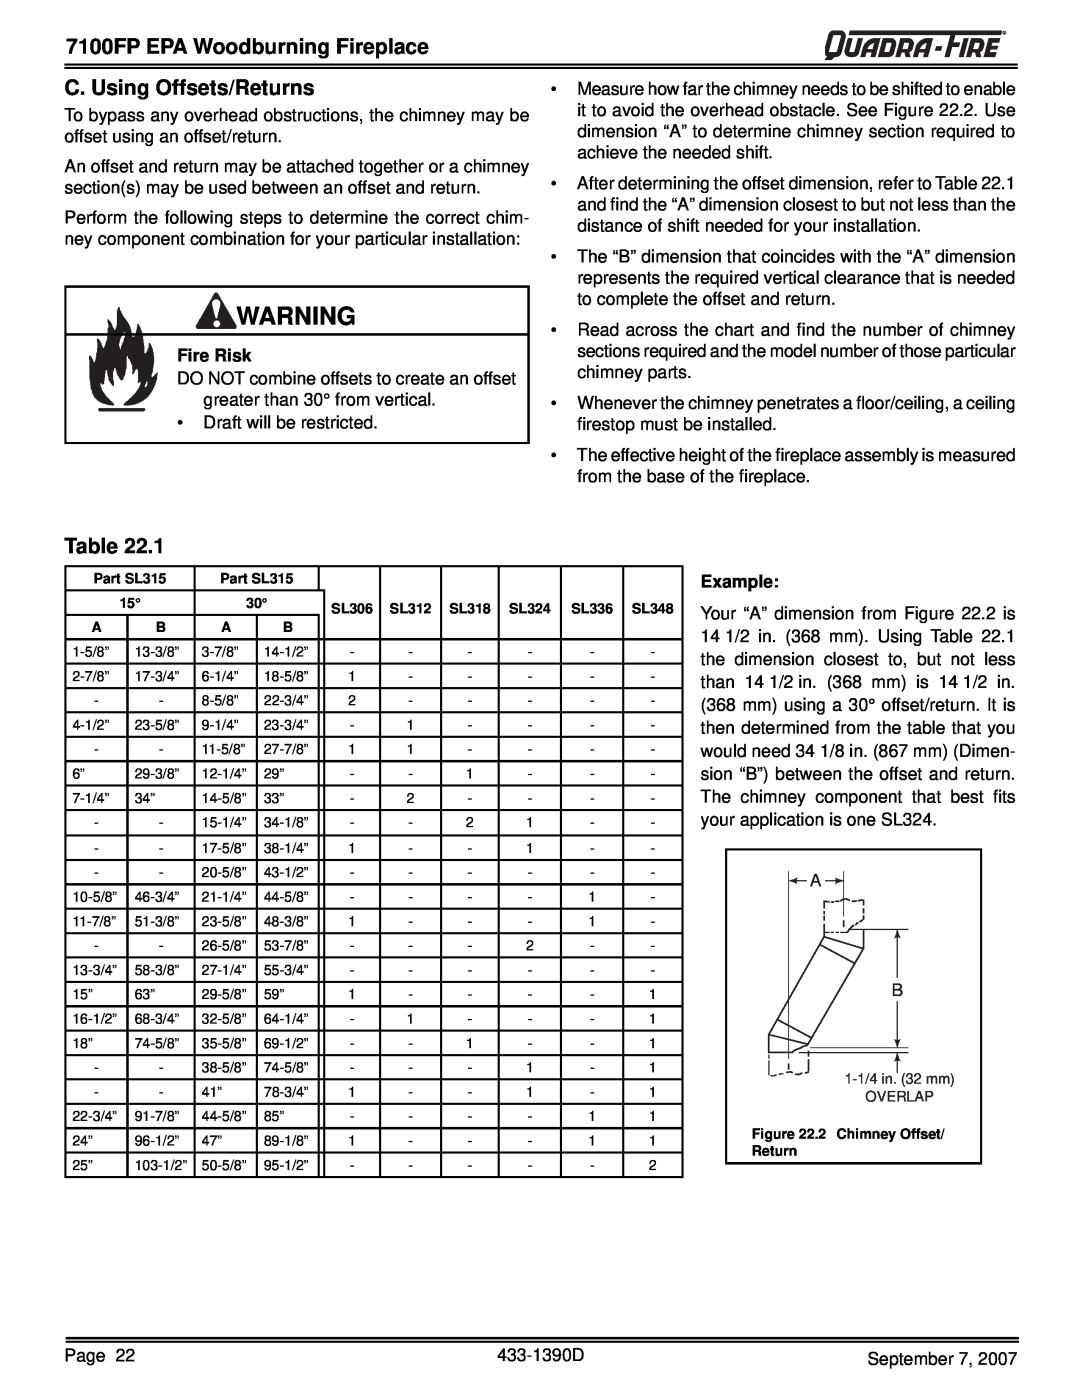 Quadra-Fire 7100FP-BK-B, 7100FP-NL-B 7100FP EPA Woodburning Fireplace, C. Using Offsets/Returns, Table, Fire Risk, Example 